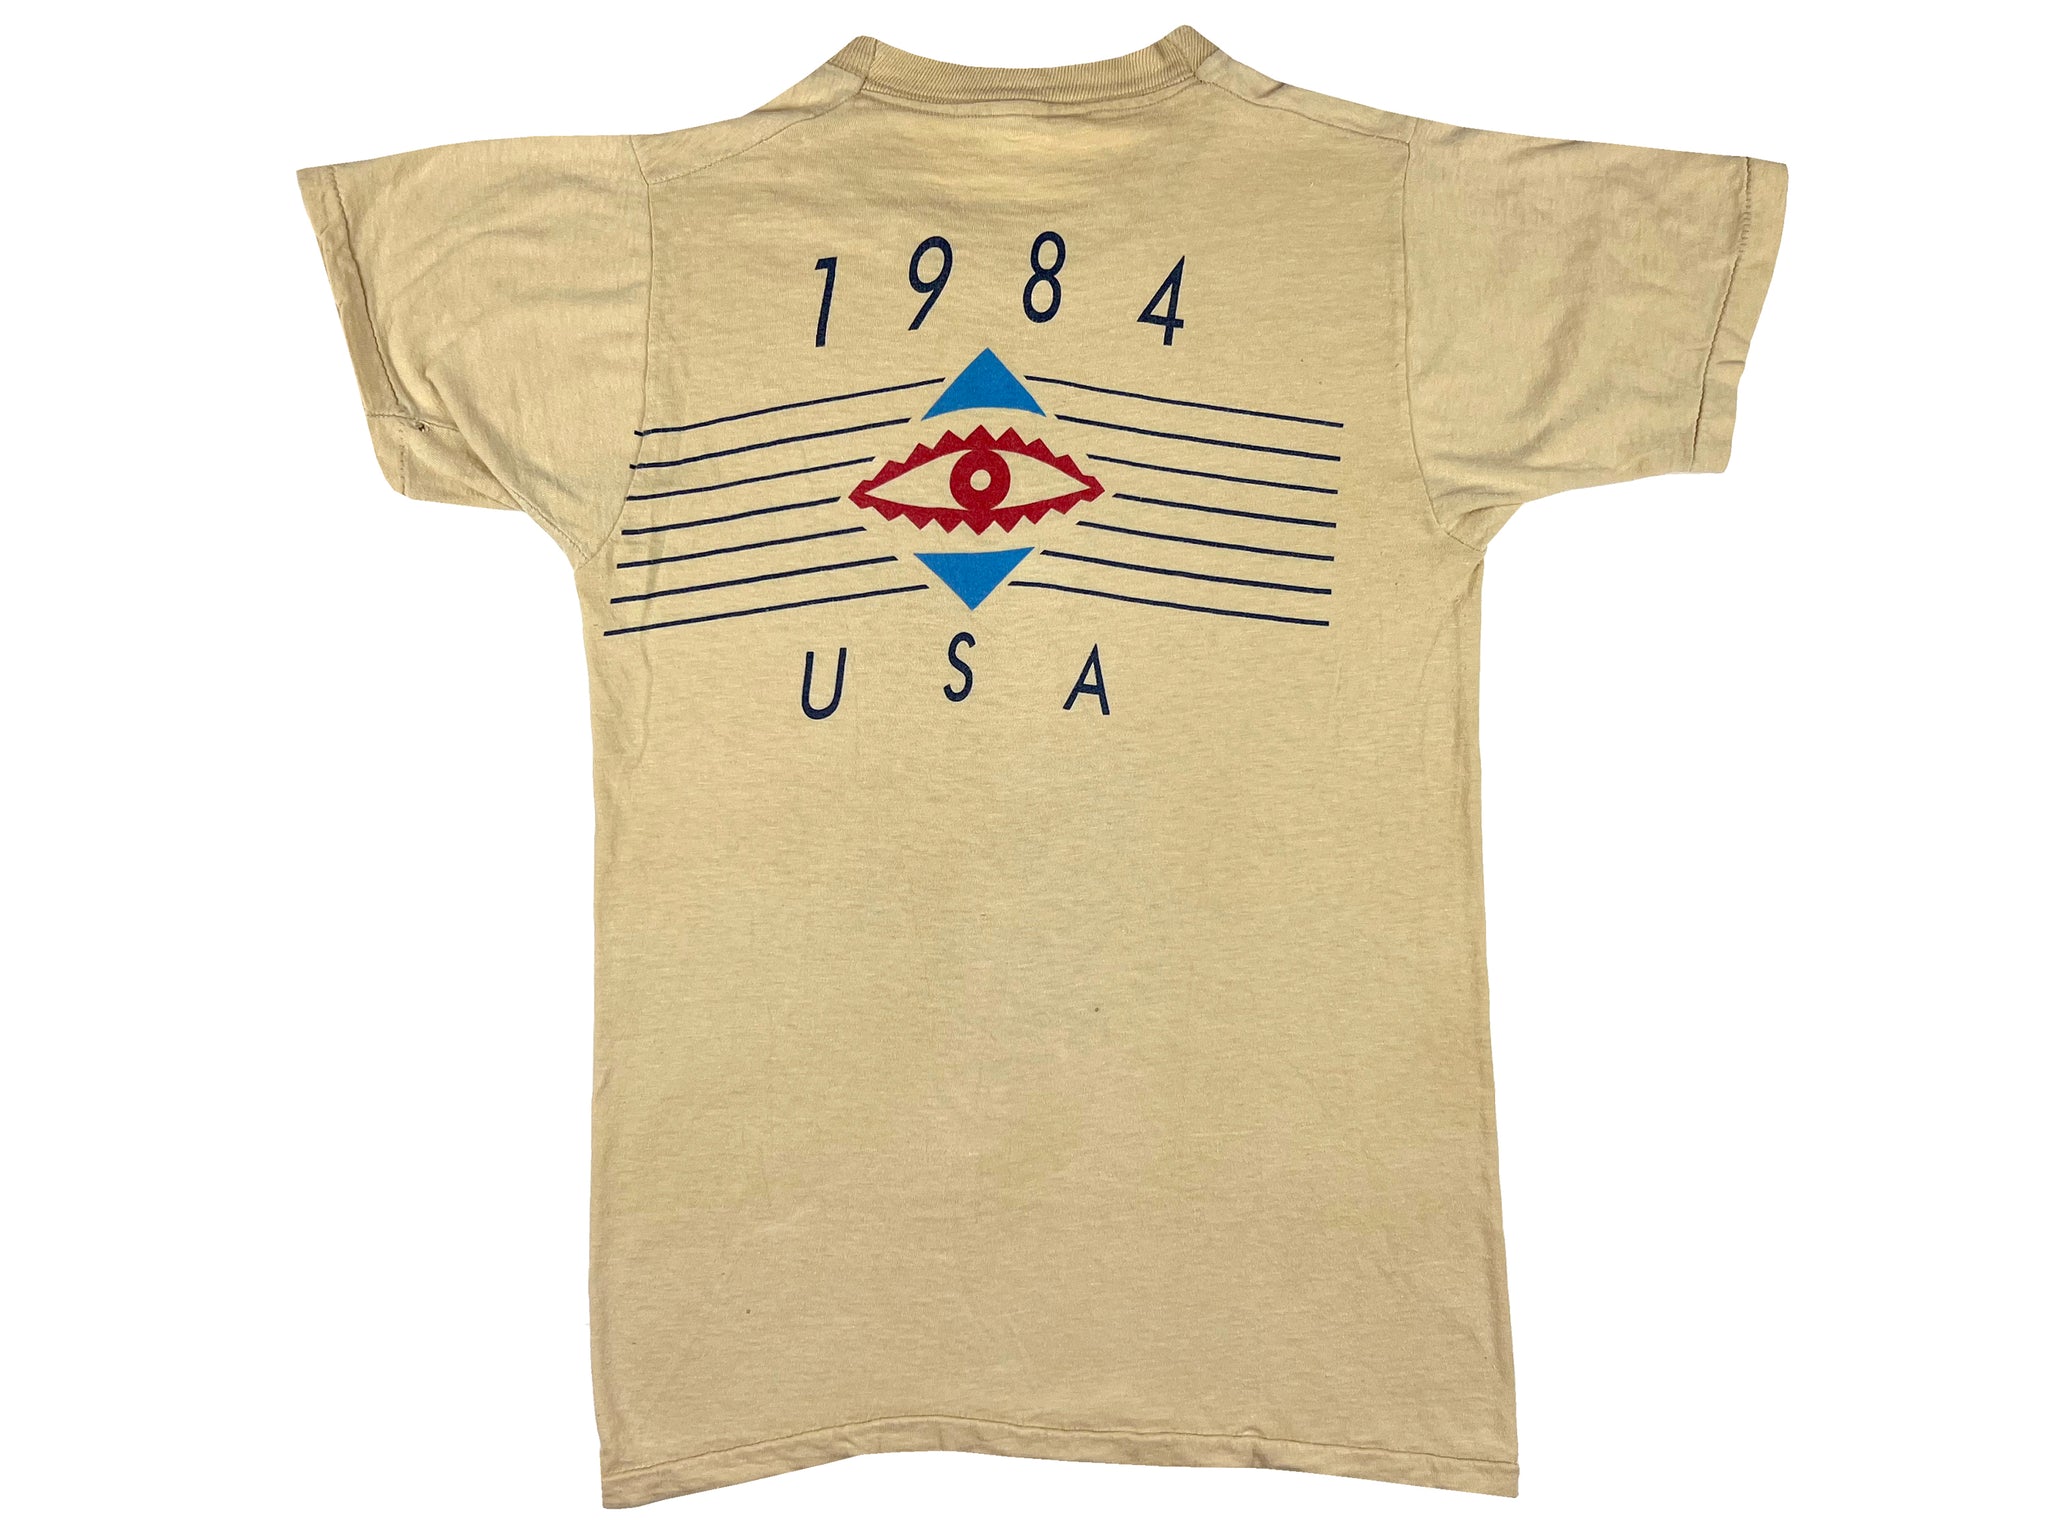 Duran Duran 1984 Tour T-Shirt